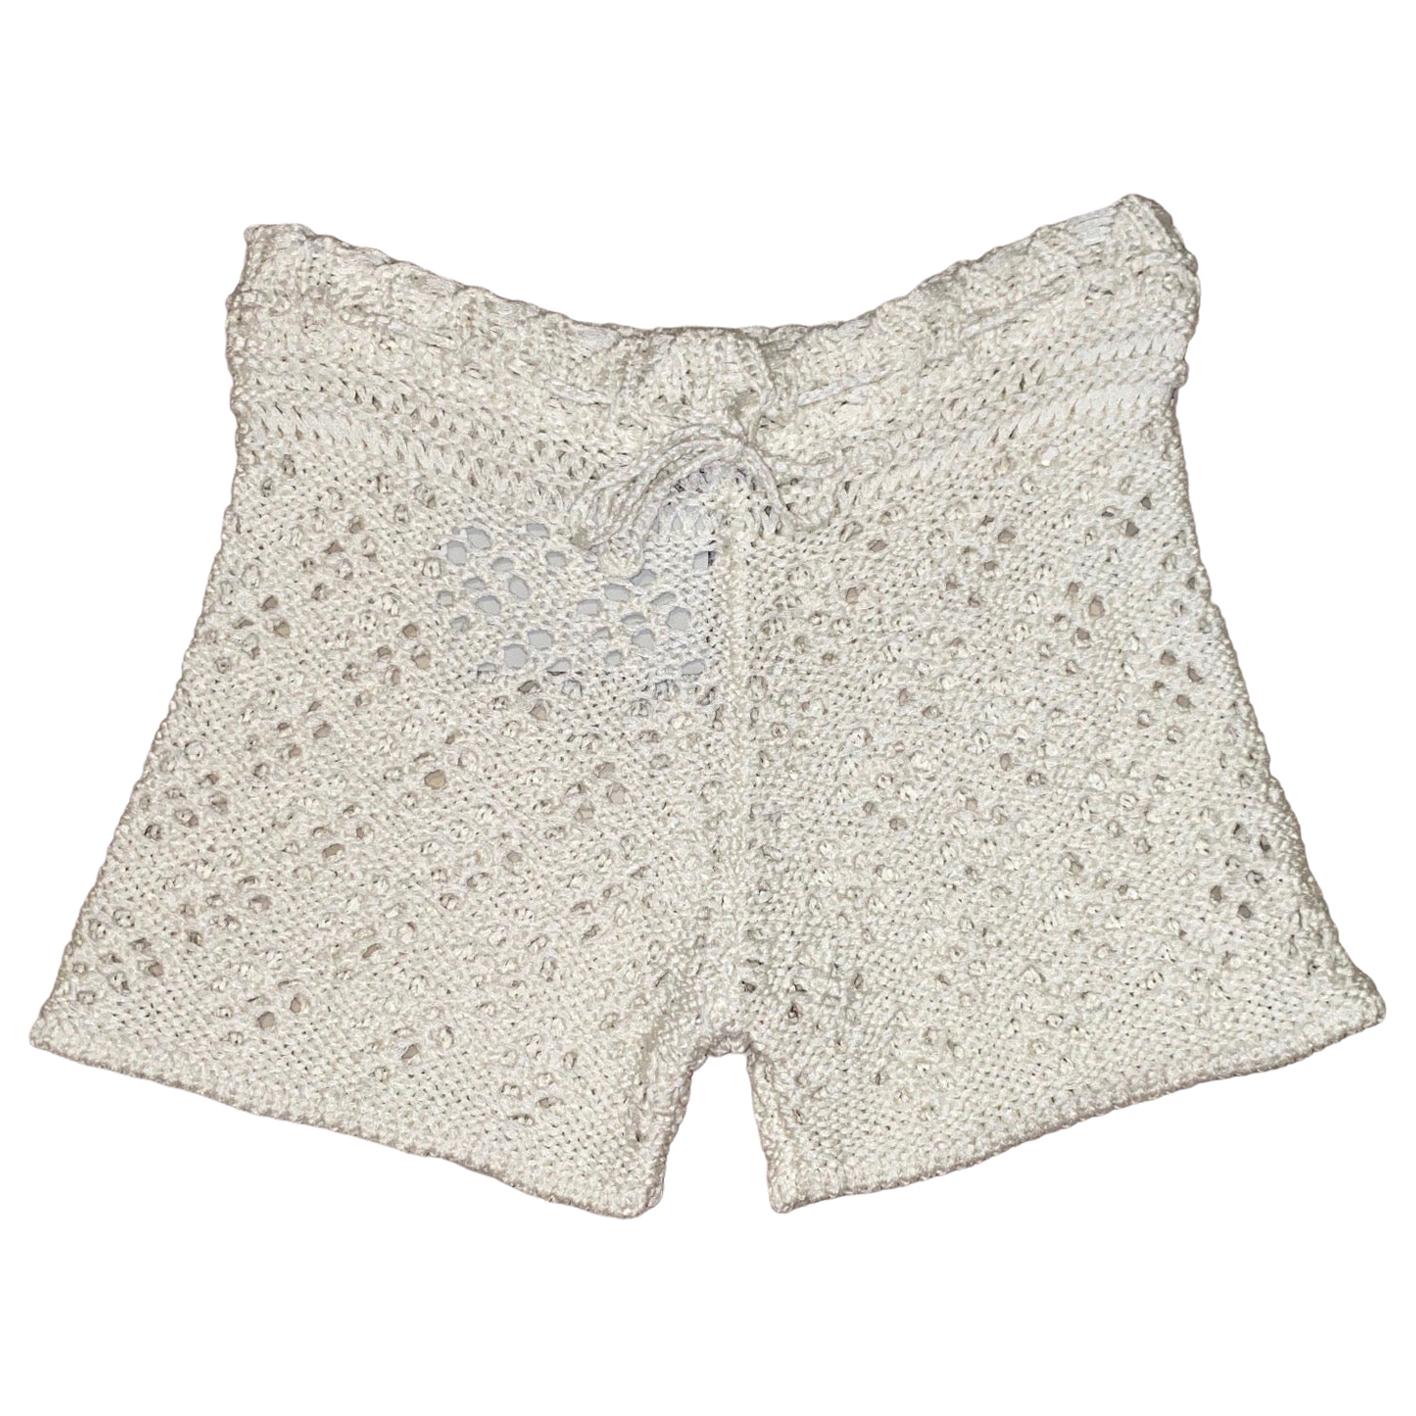 NEW Emilio Pucci Ivory Cotton Crochet Knit Shorts Hot Pants M